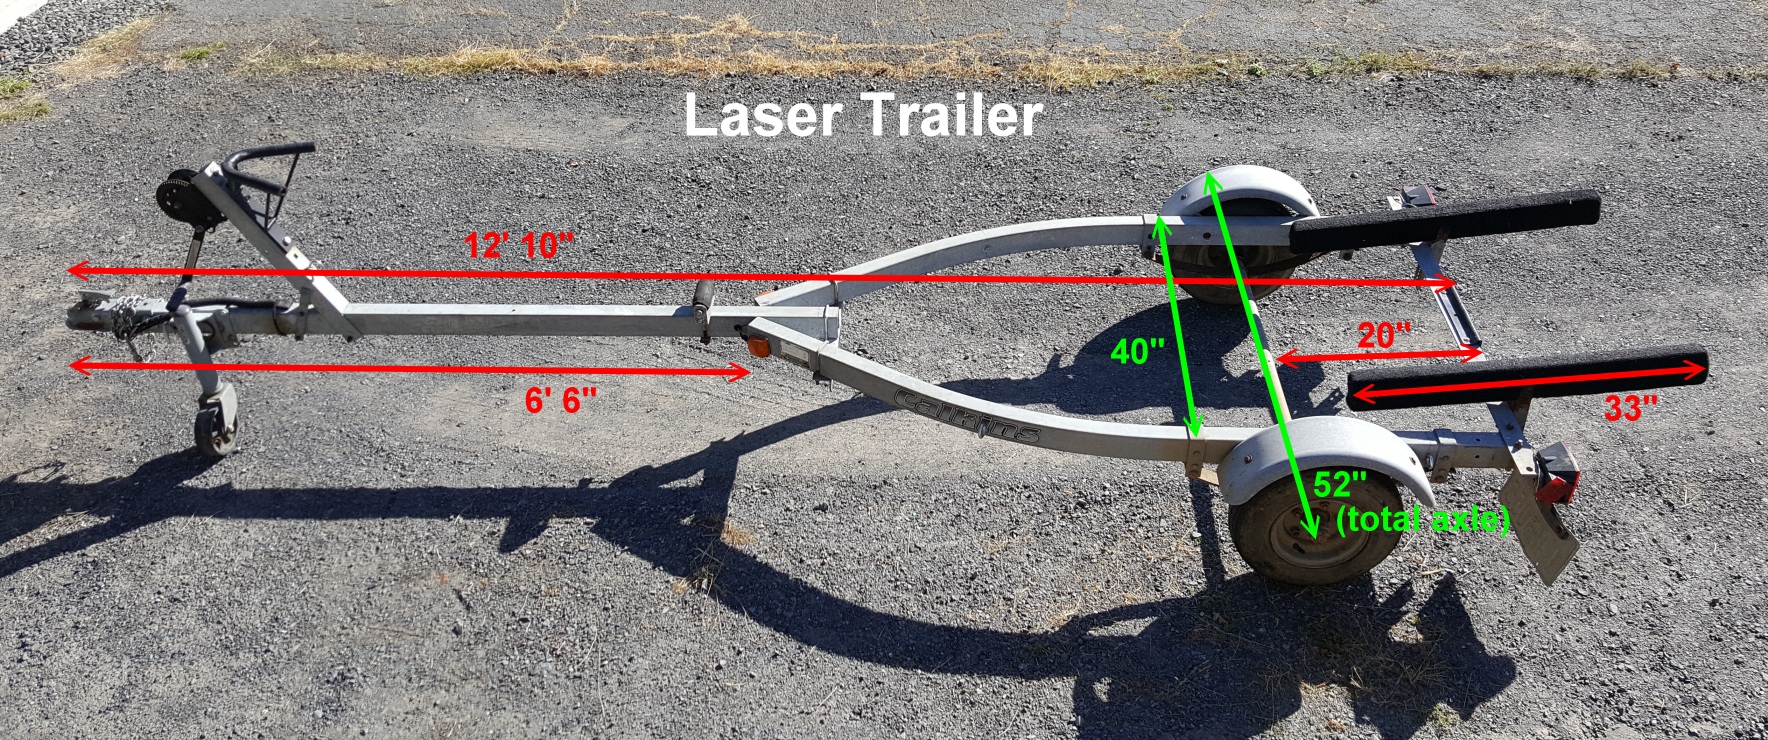 Laser Trailer Dimensions.jpg